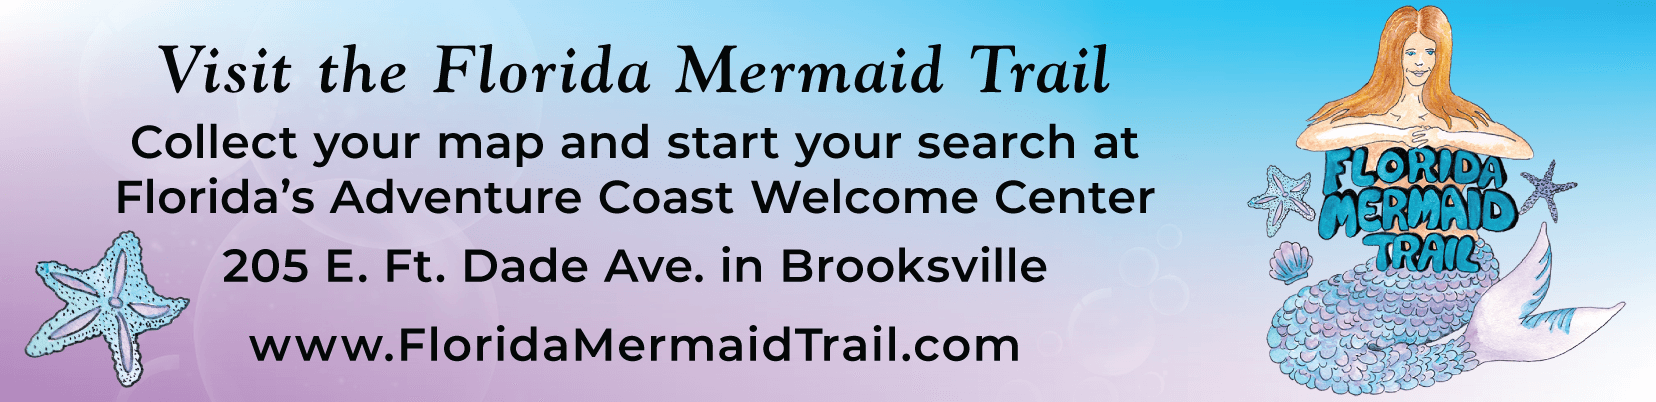 Florida Mermaid Trail